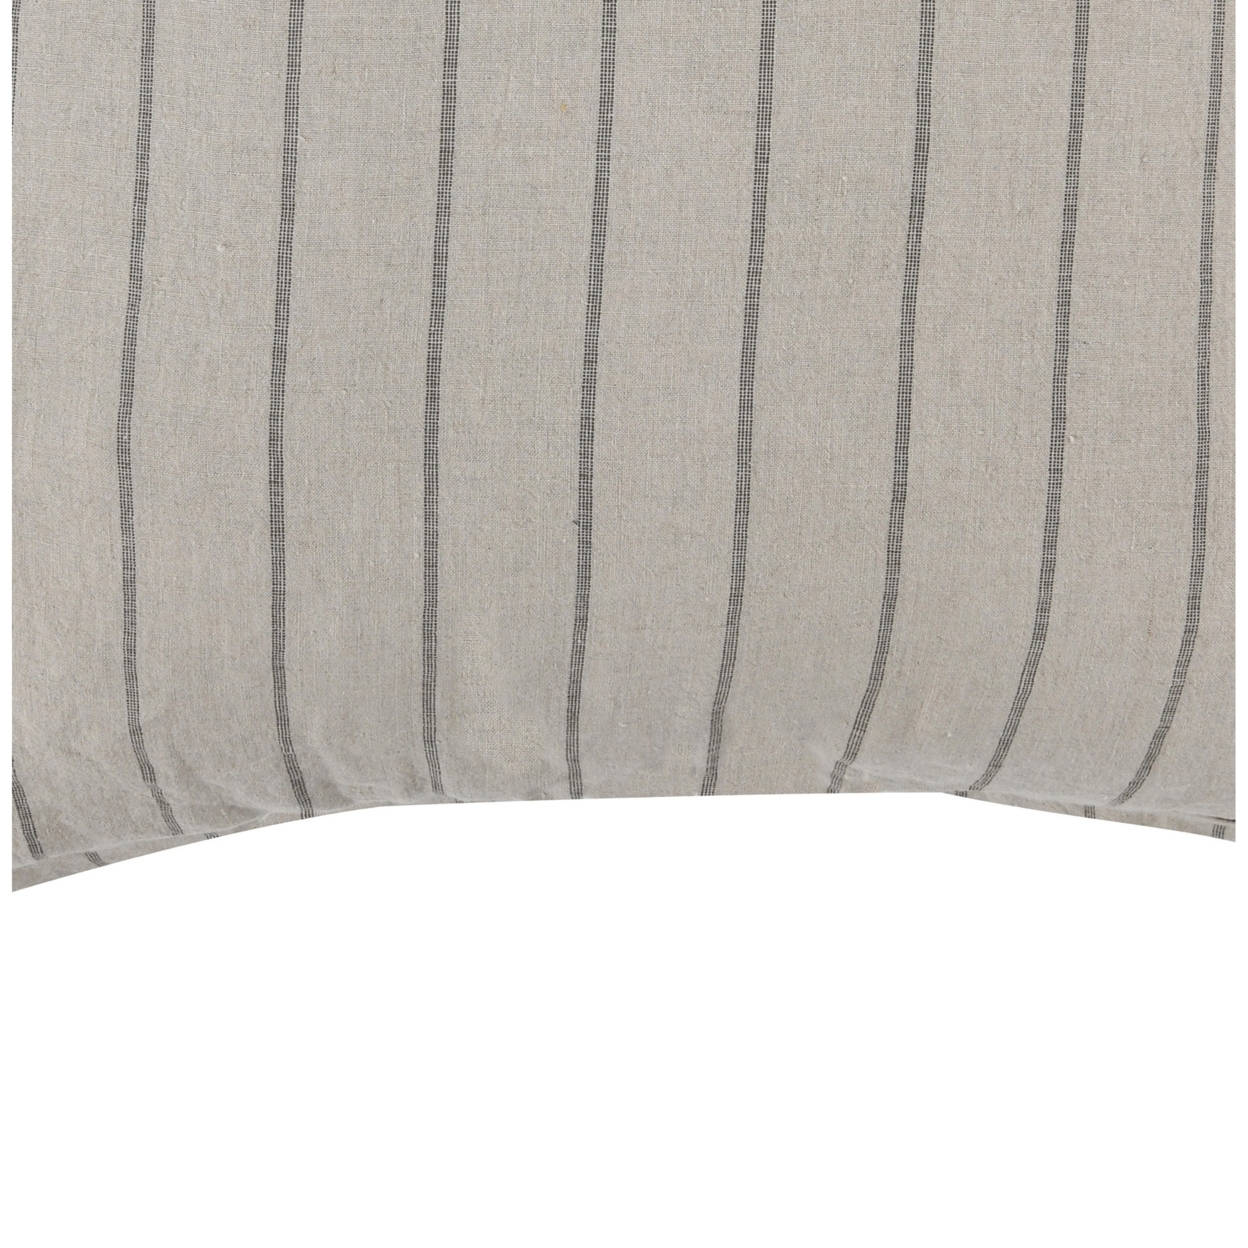 Tara 26 Inch Linen Square Euro Pillow Sham With Woven Stripe Design, Beige- Saltoro Sherpi